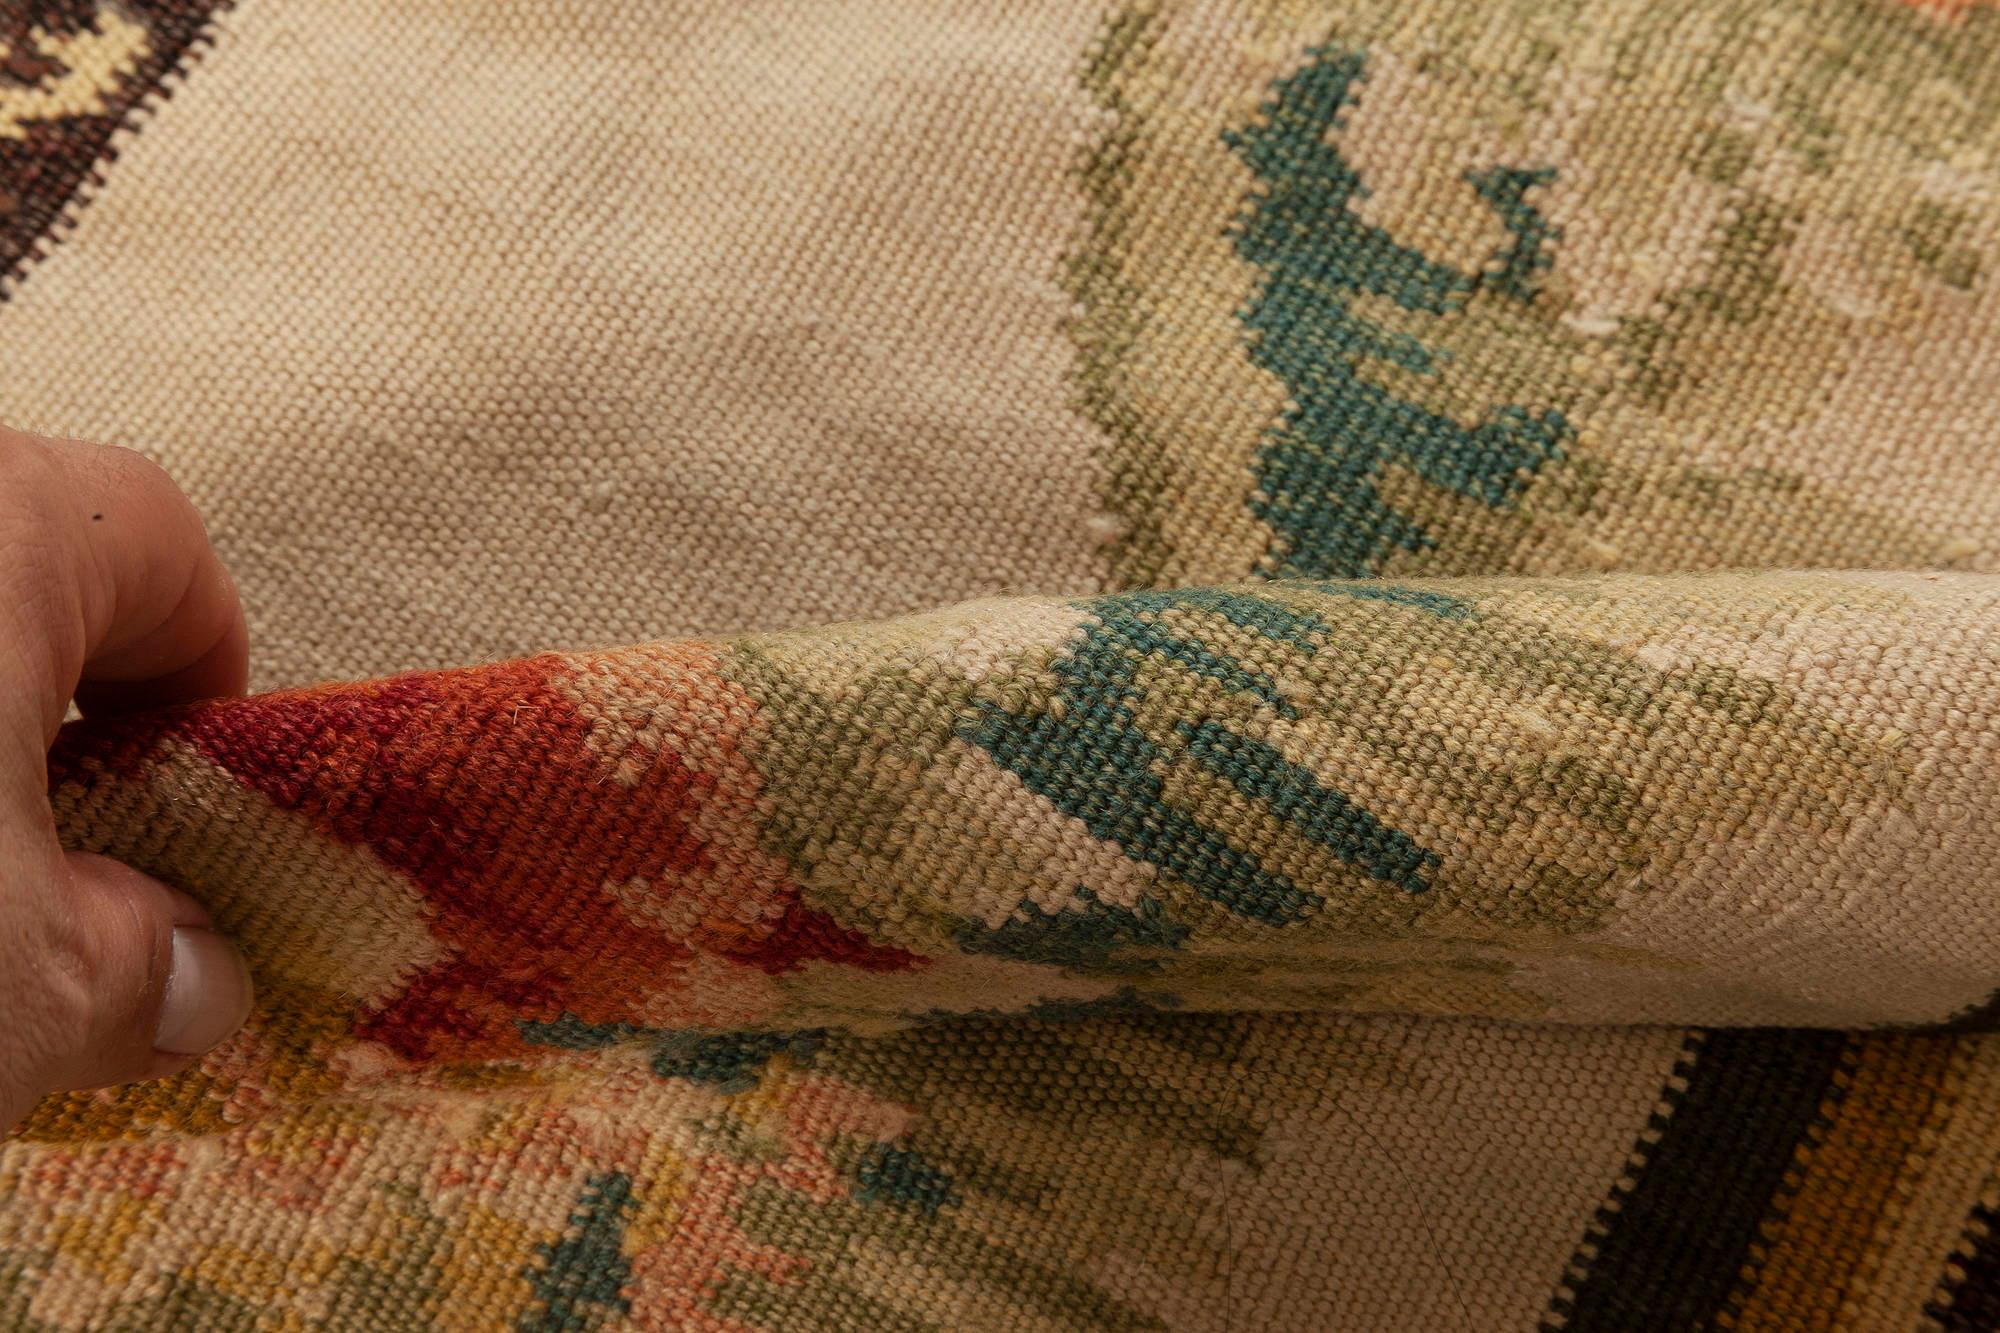 Contemporary Bessarabian floral design handmade wool rug by Doris Leslie Blau.
Size: 7'10